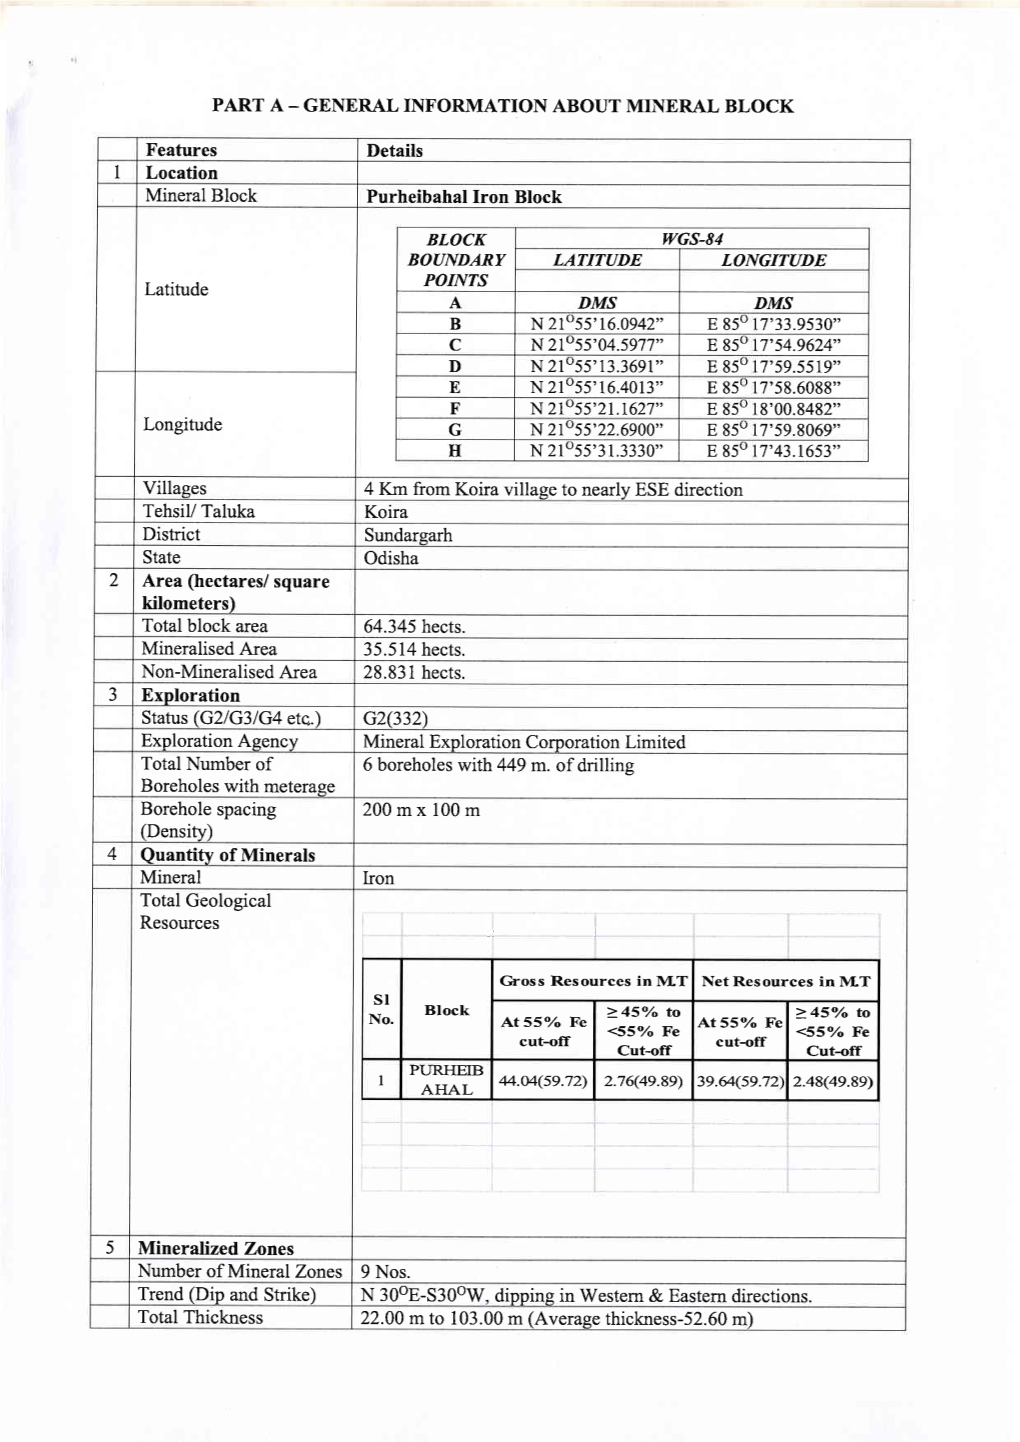 Purheibahal Mine Block Summary Dtd 23-02-2018